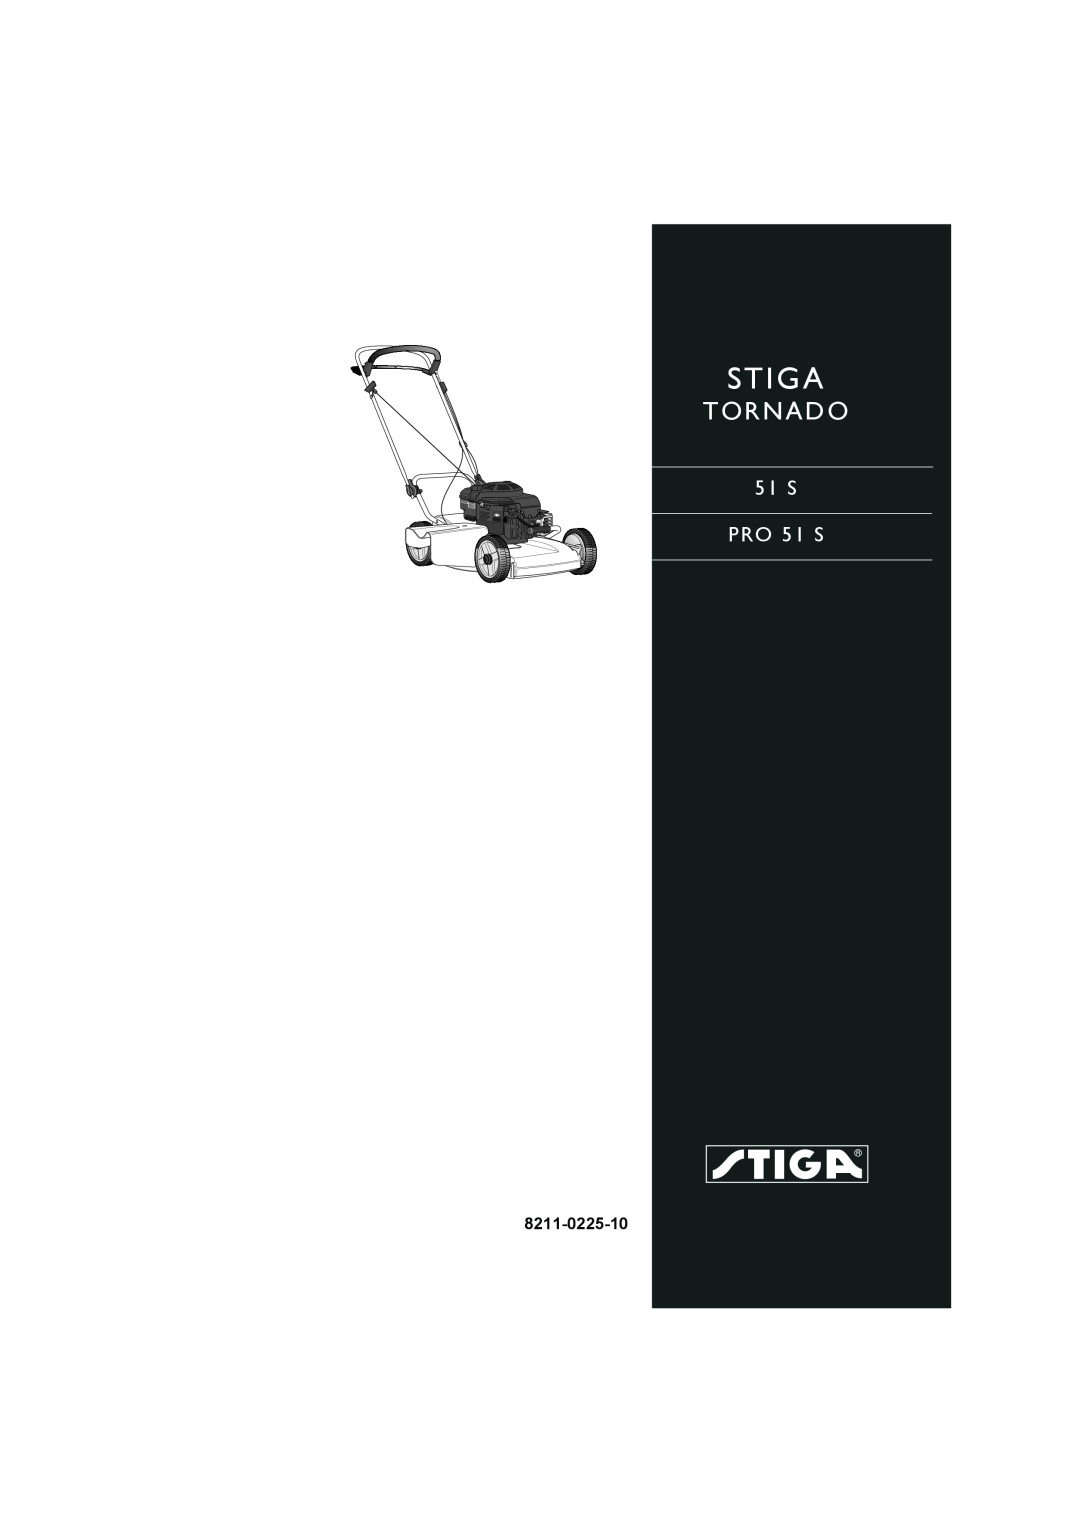 Stiga manual 8211-0225-08, Tornado, 51 S 51 SE PRO 51 S 